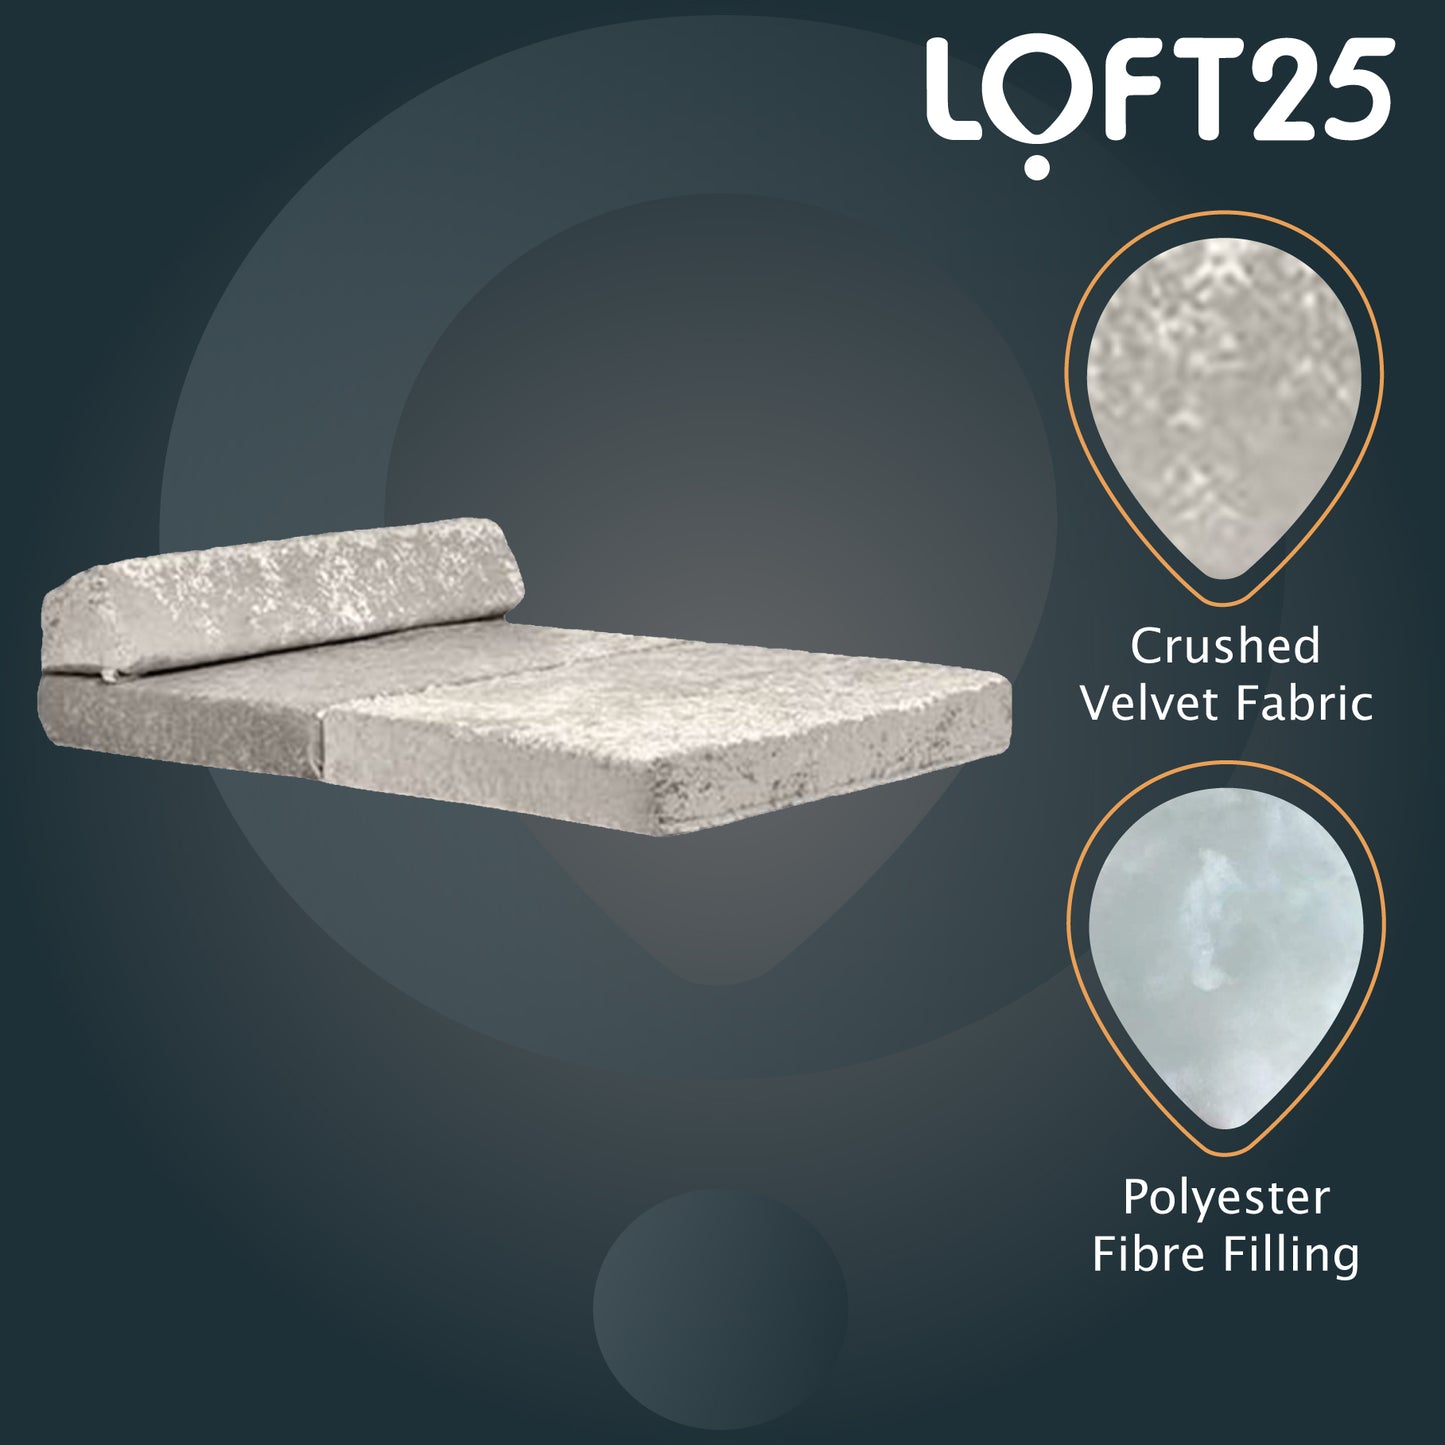 Loft25 Foldable Bed Living Room Z Bed Mattress